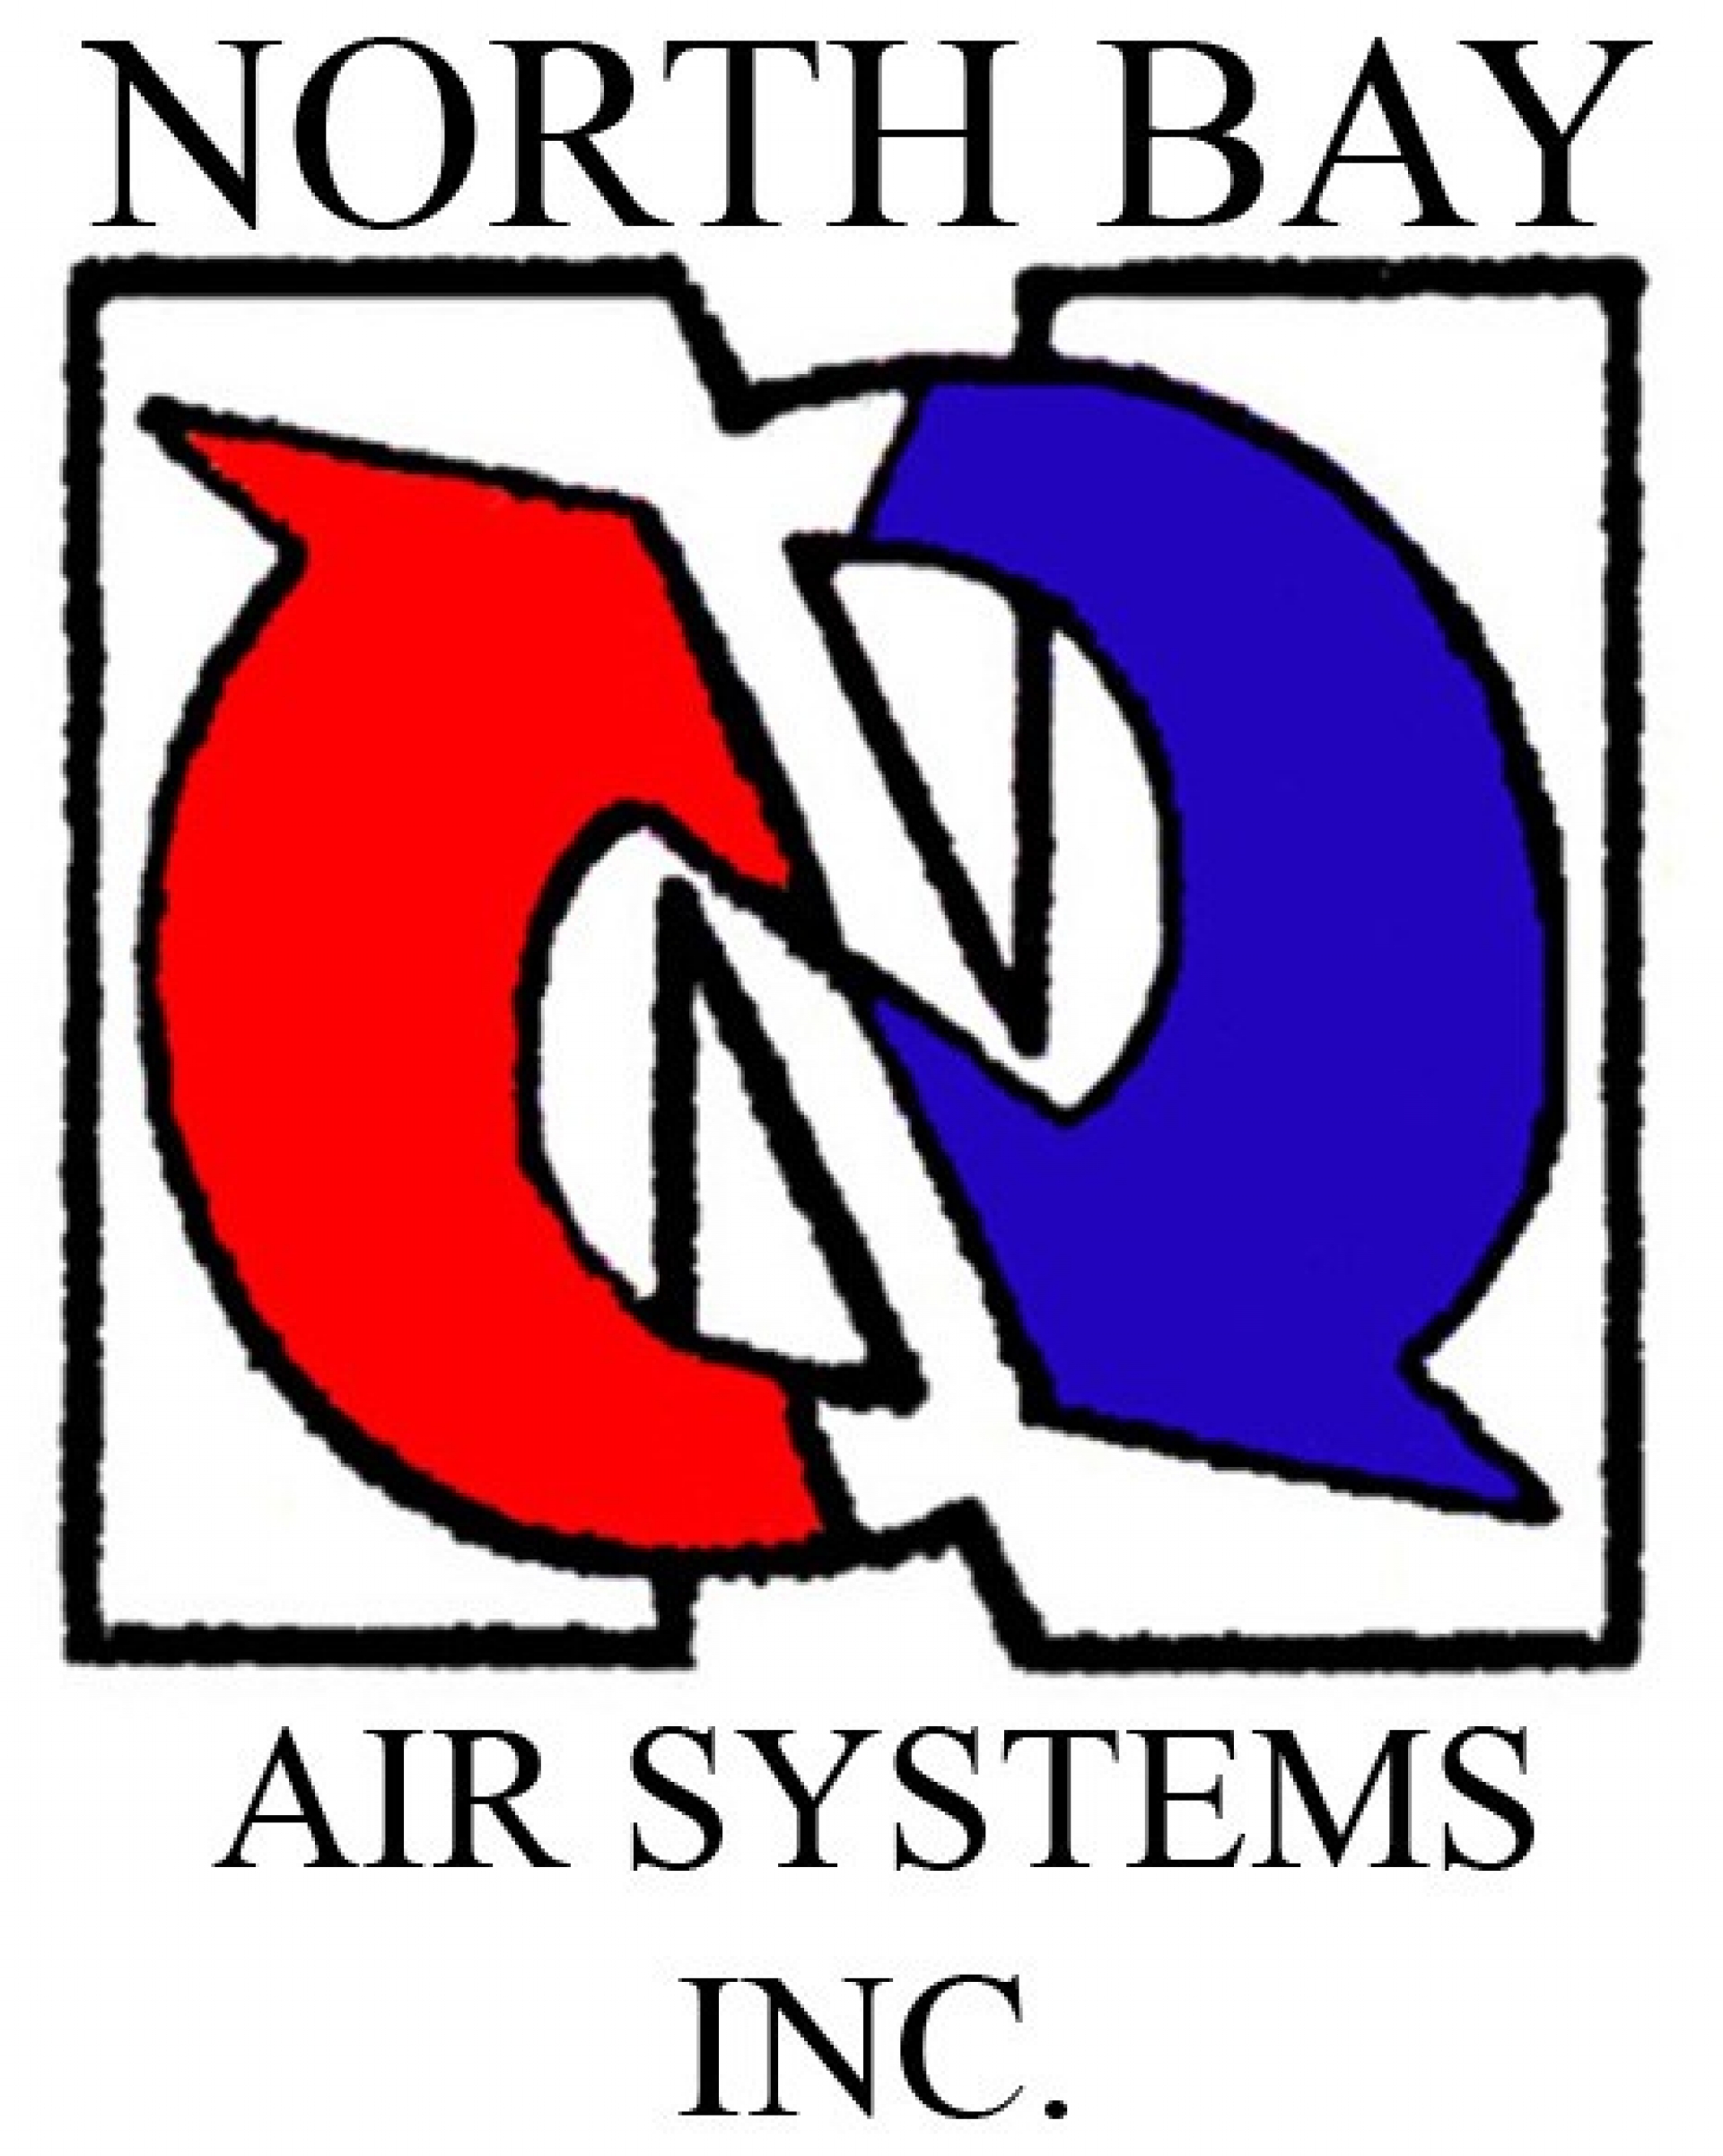 North Bay Air Systems Inc logo